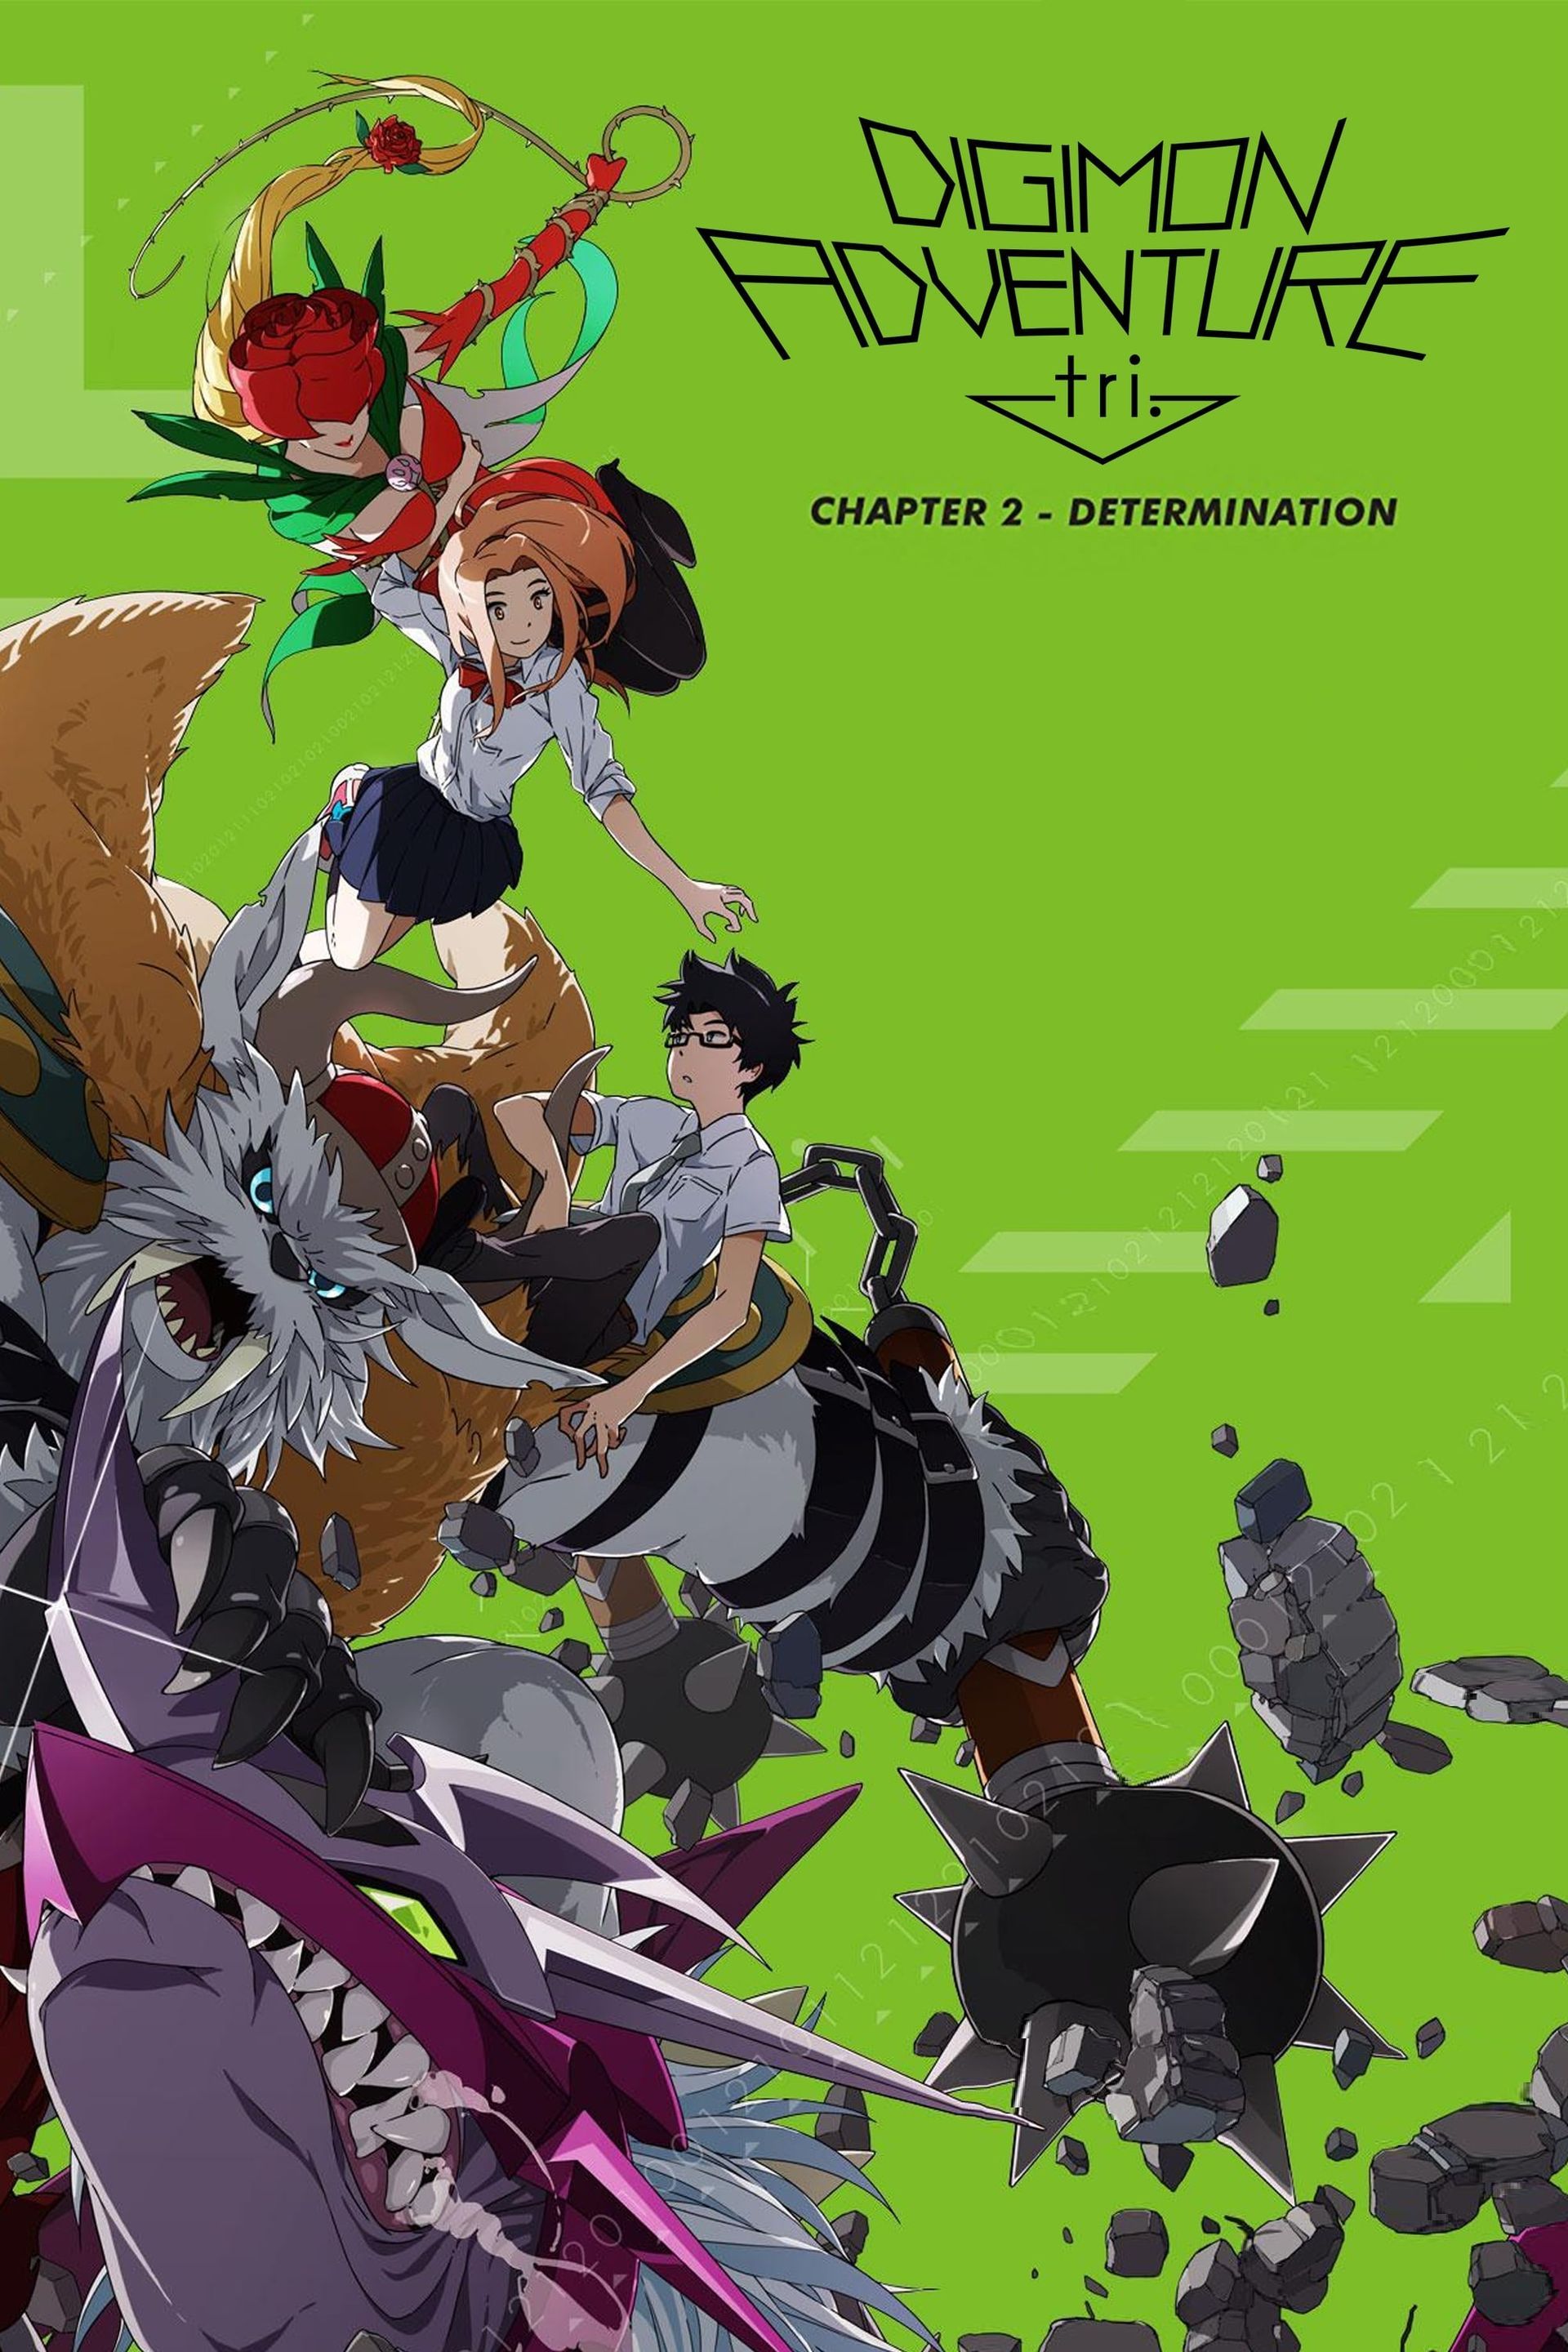 Watch Digimon: Digital Monsters · Digimon Adventure 02 Full Episodes Online  - Plex